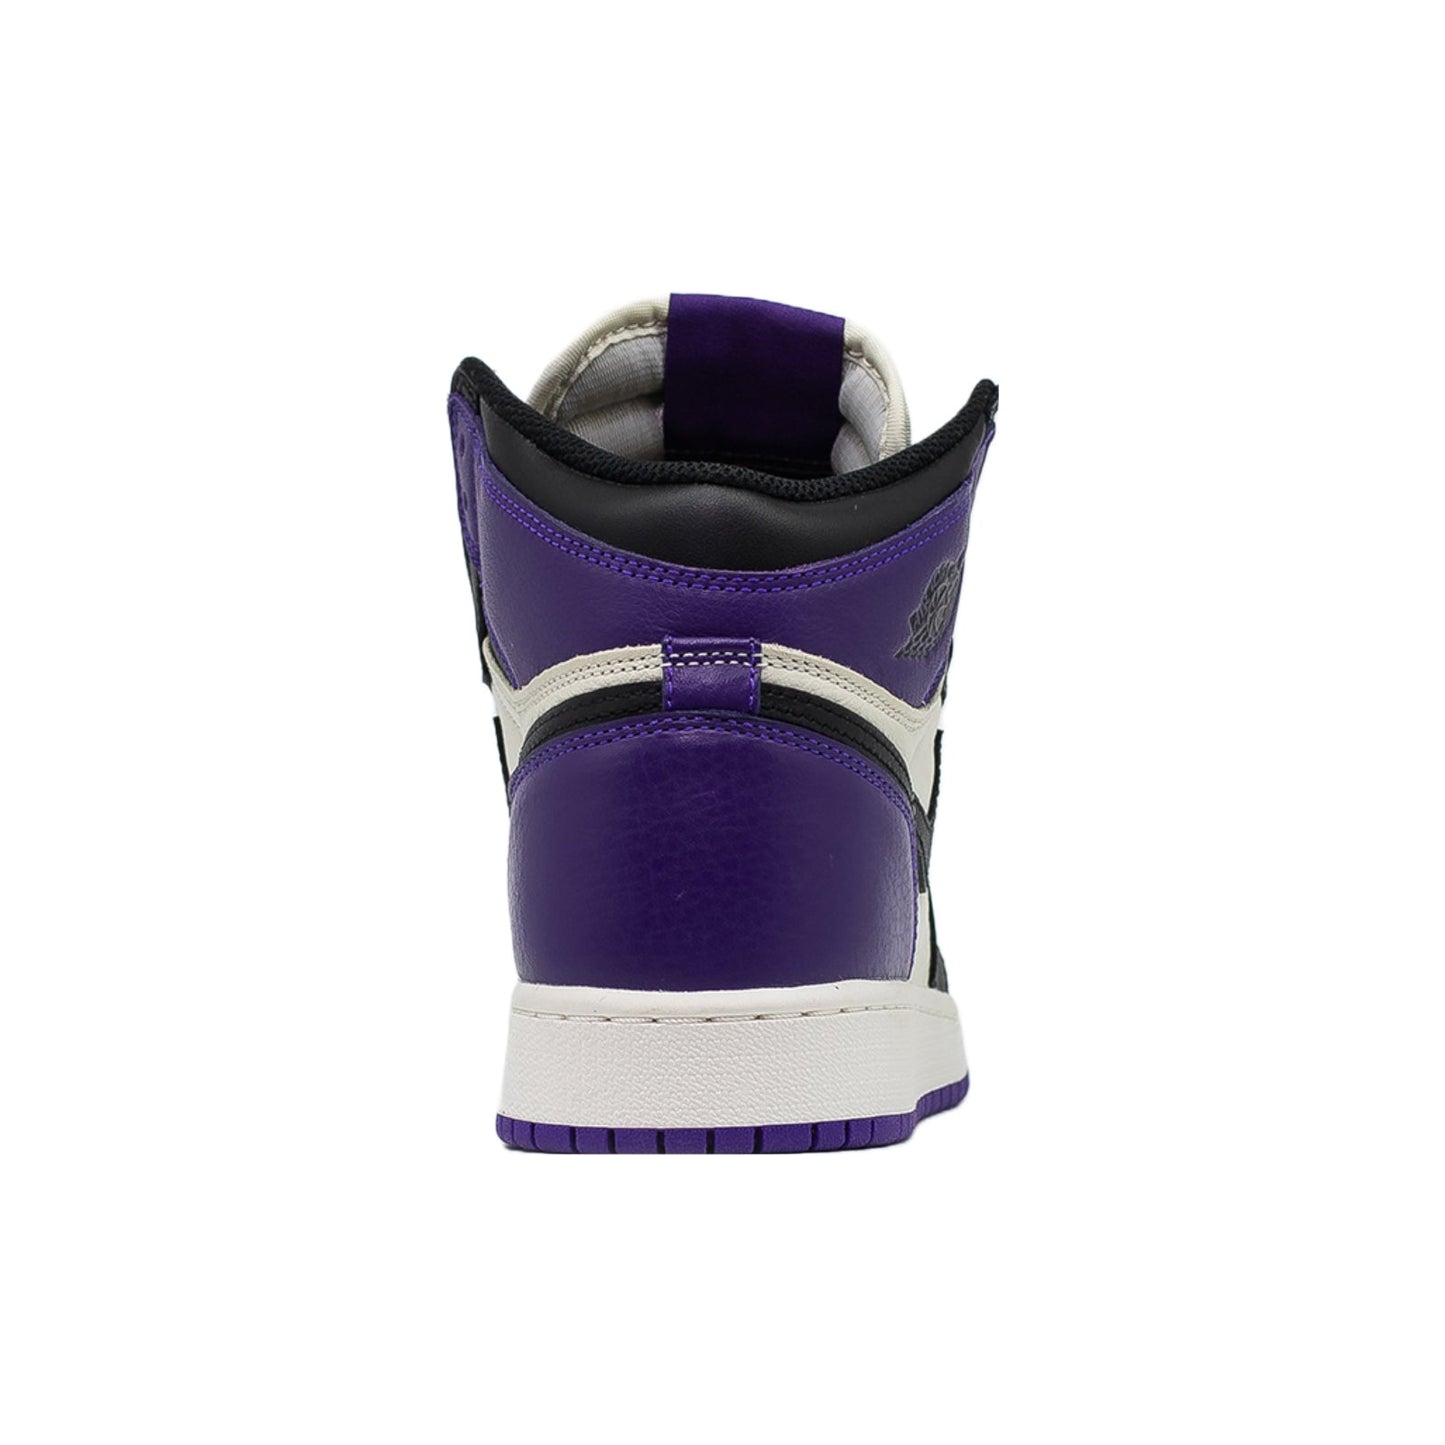 Air Nike ajko 1 air jordan storm blue black white sneakers shoes do5047-401 mens 17 (GS), Court Purple